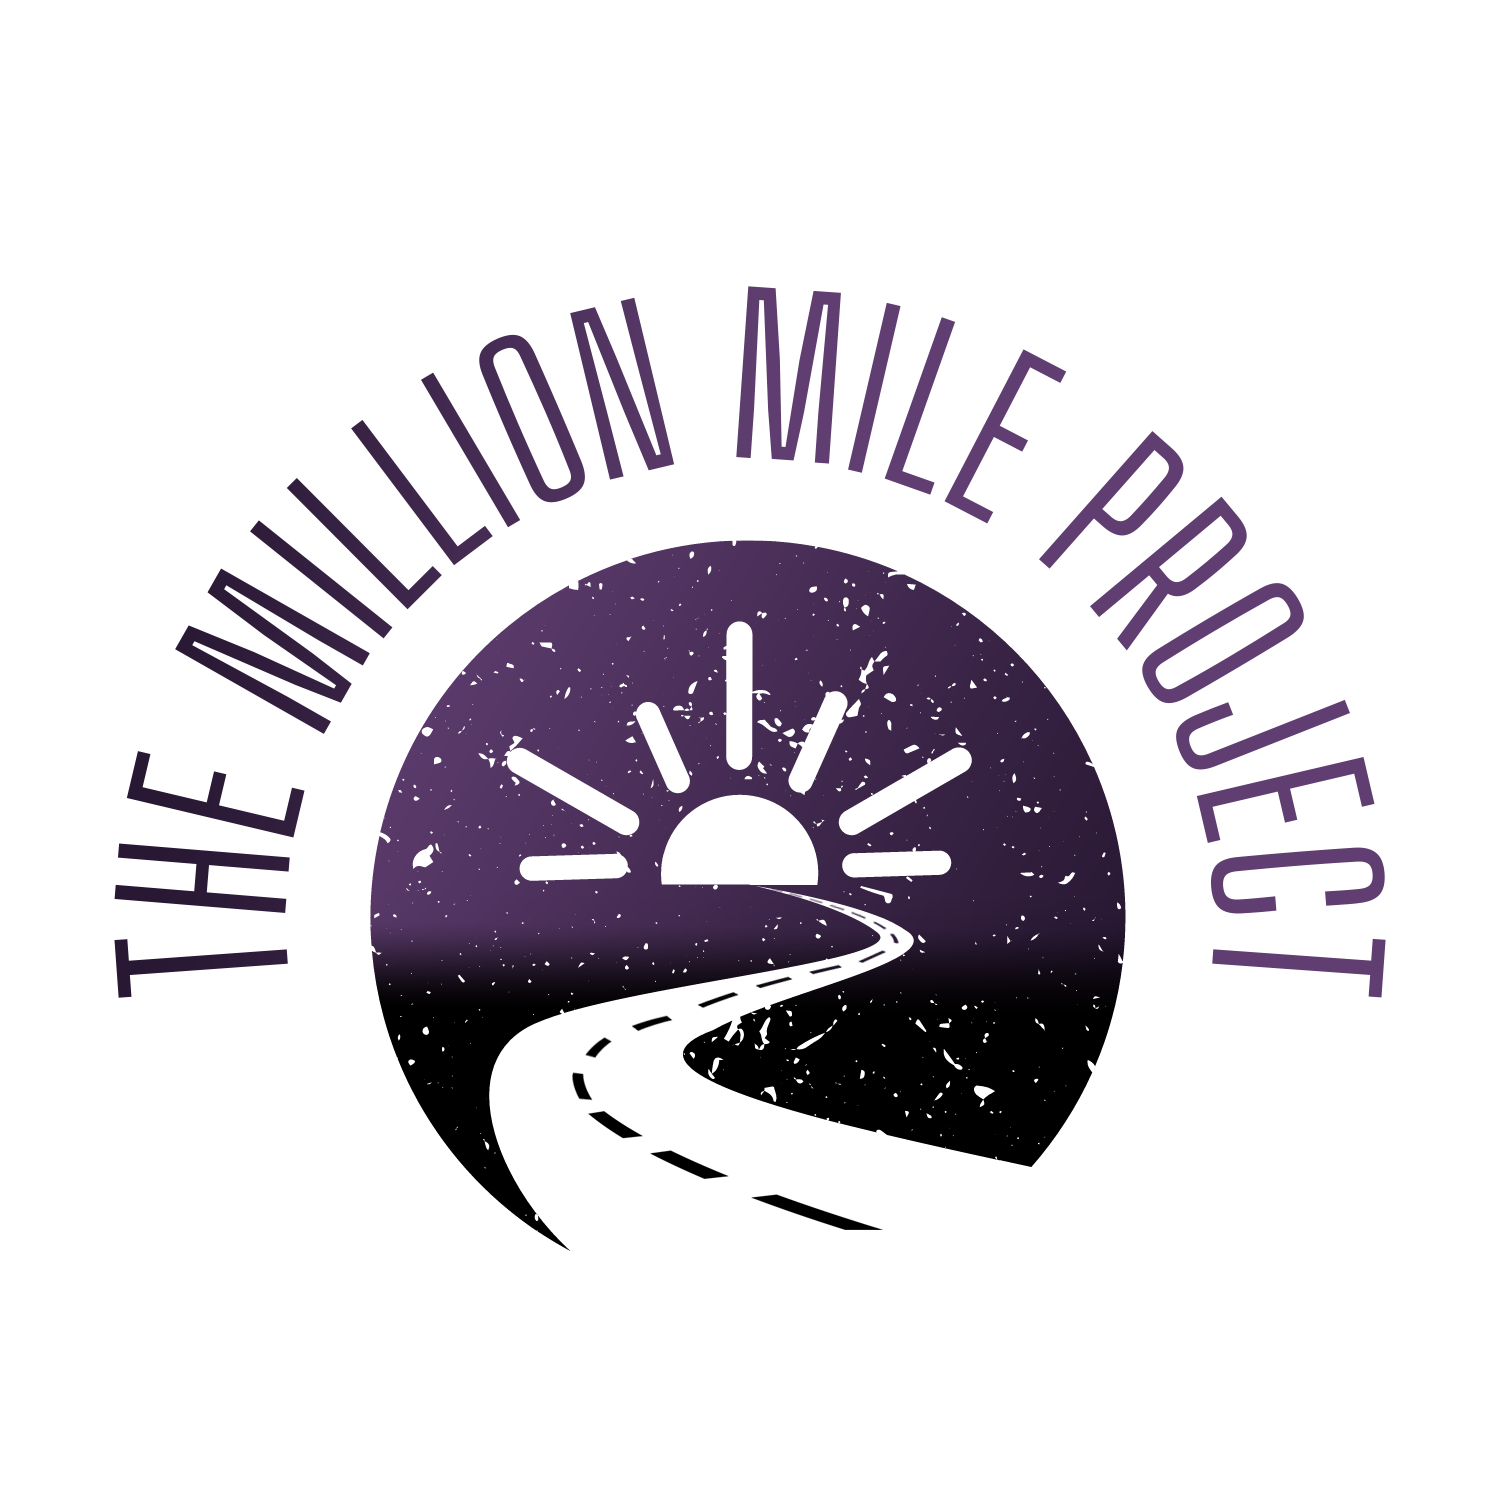 The Million Mile Project logo